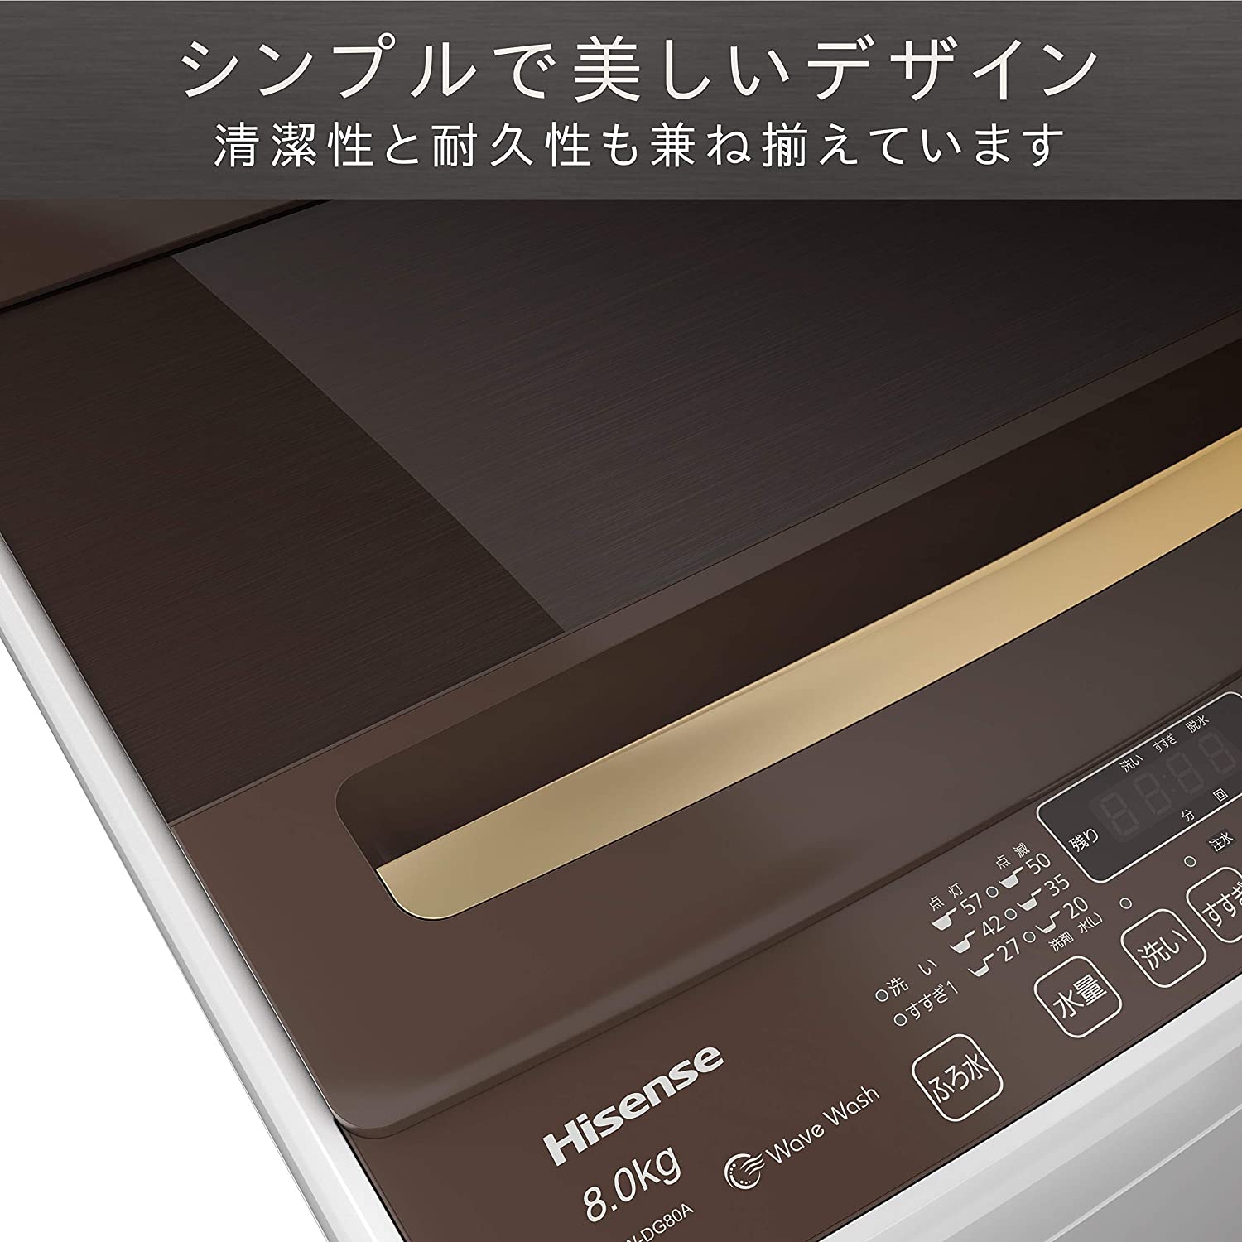 Hisense(ハイセンス) 全自動洗濯機 HW-DG80Aの商品画像2 